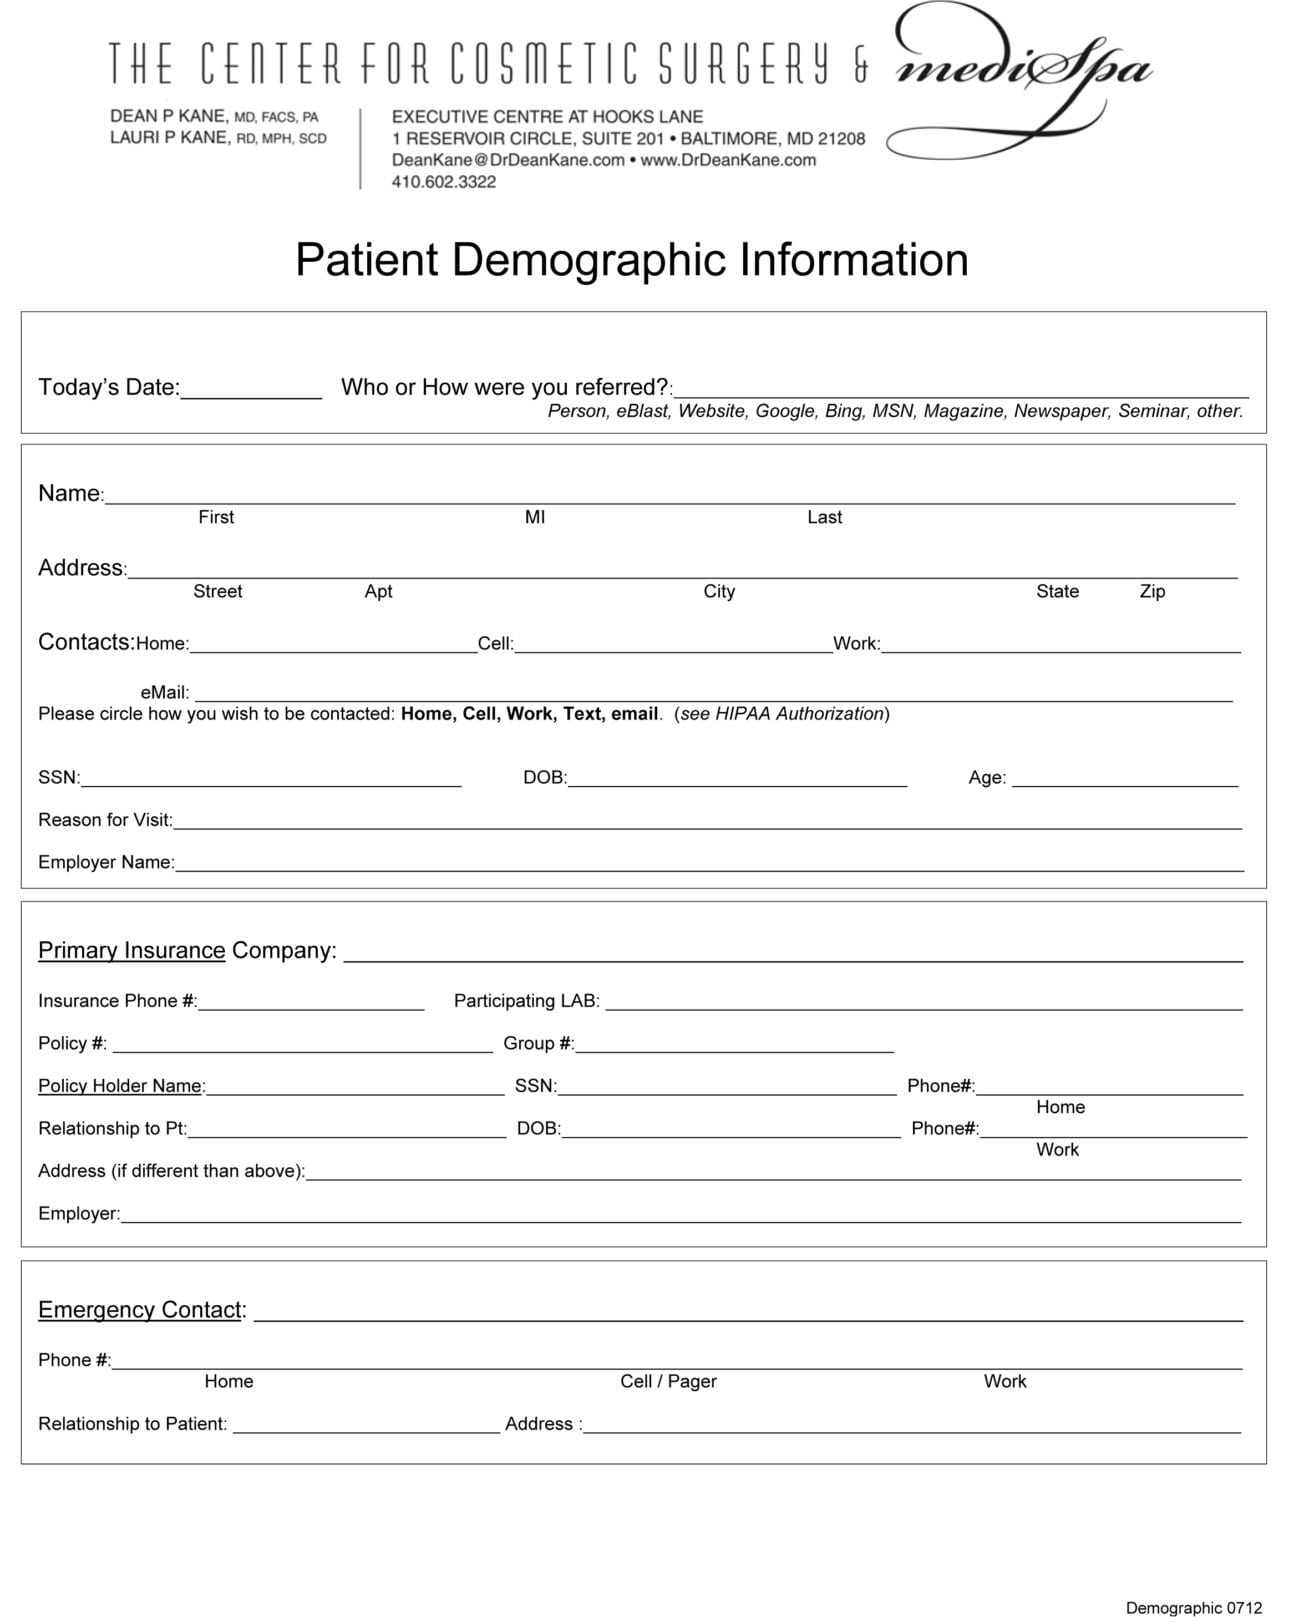 Sample Patient Demographic Form 0065